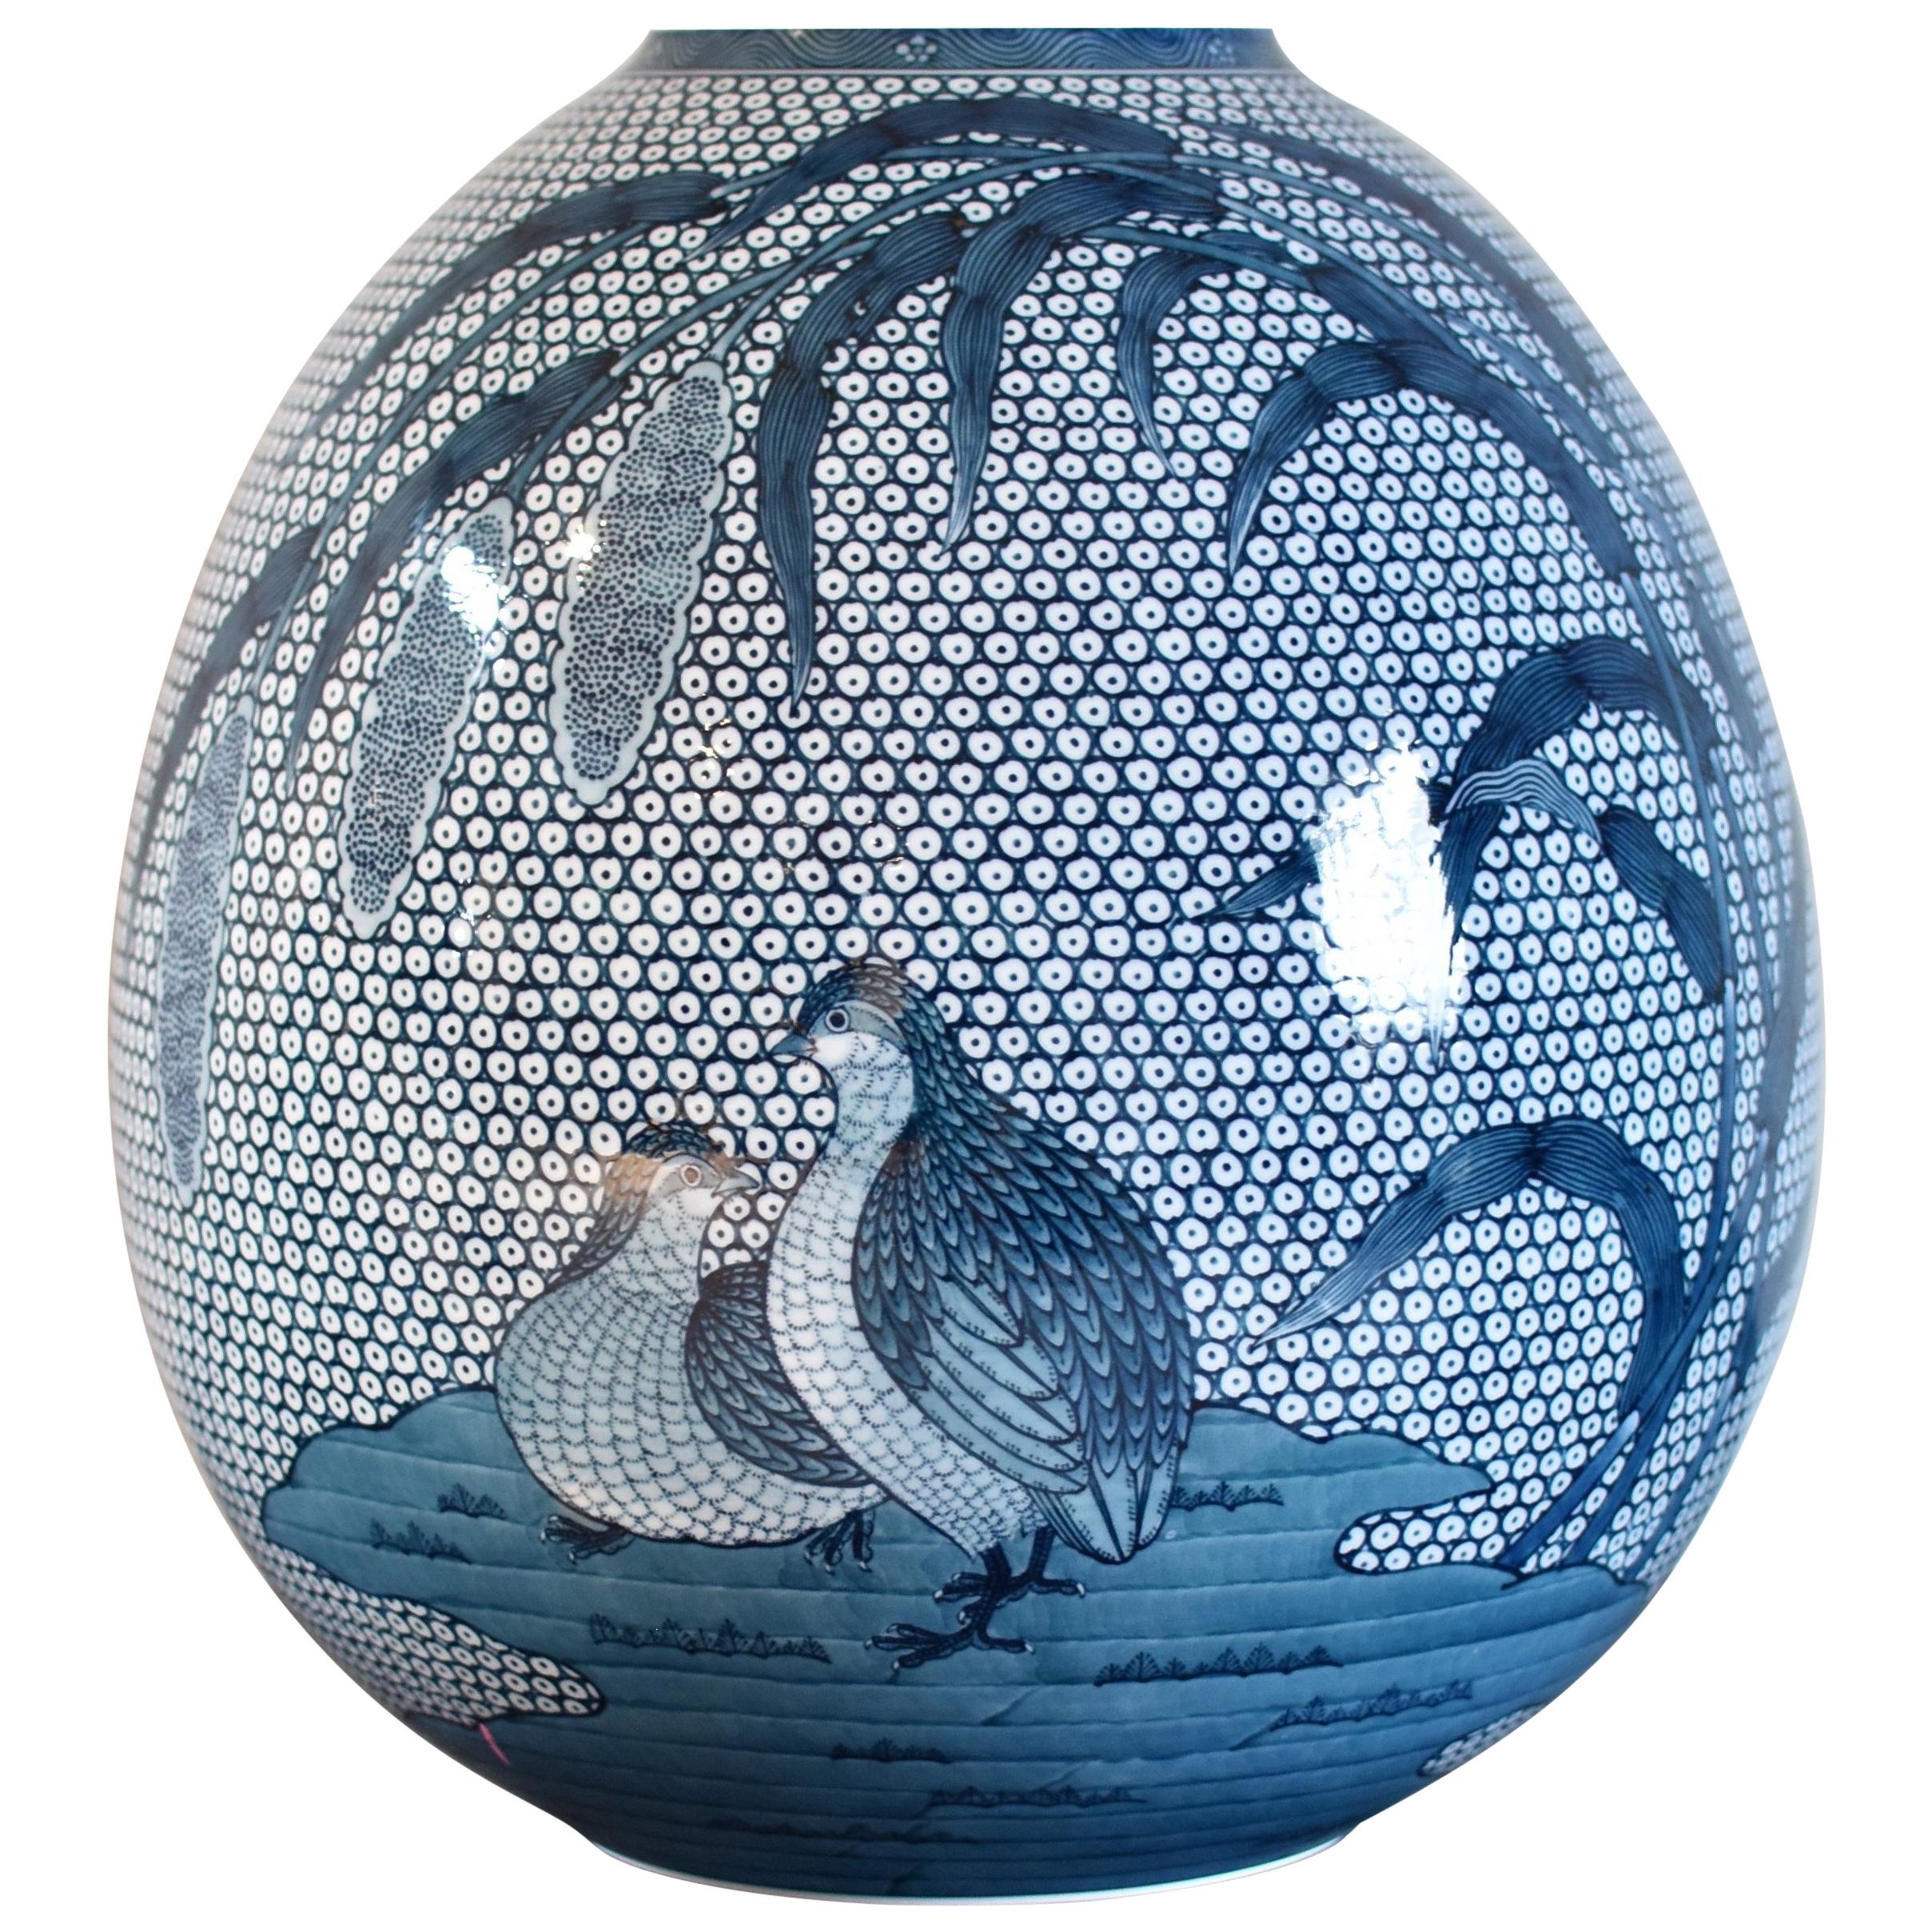 Japanese Imari Hand Painted Blue Porcelain Vase by Contemporary Master Artist